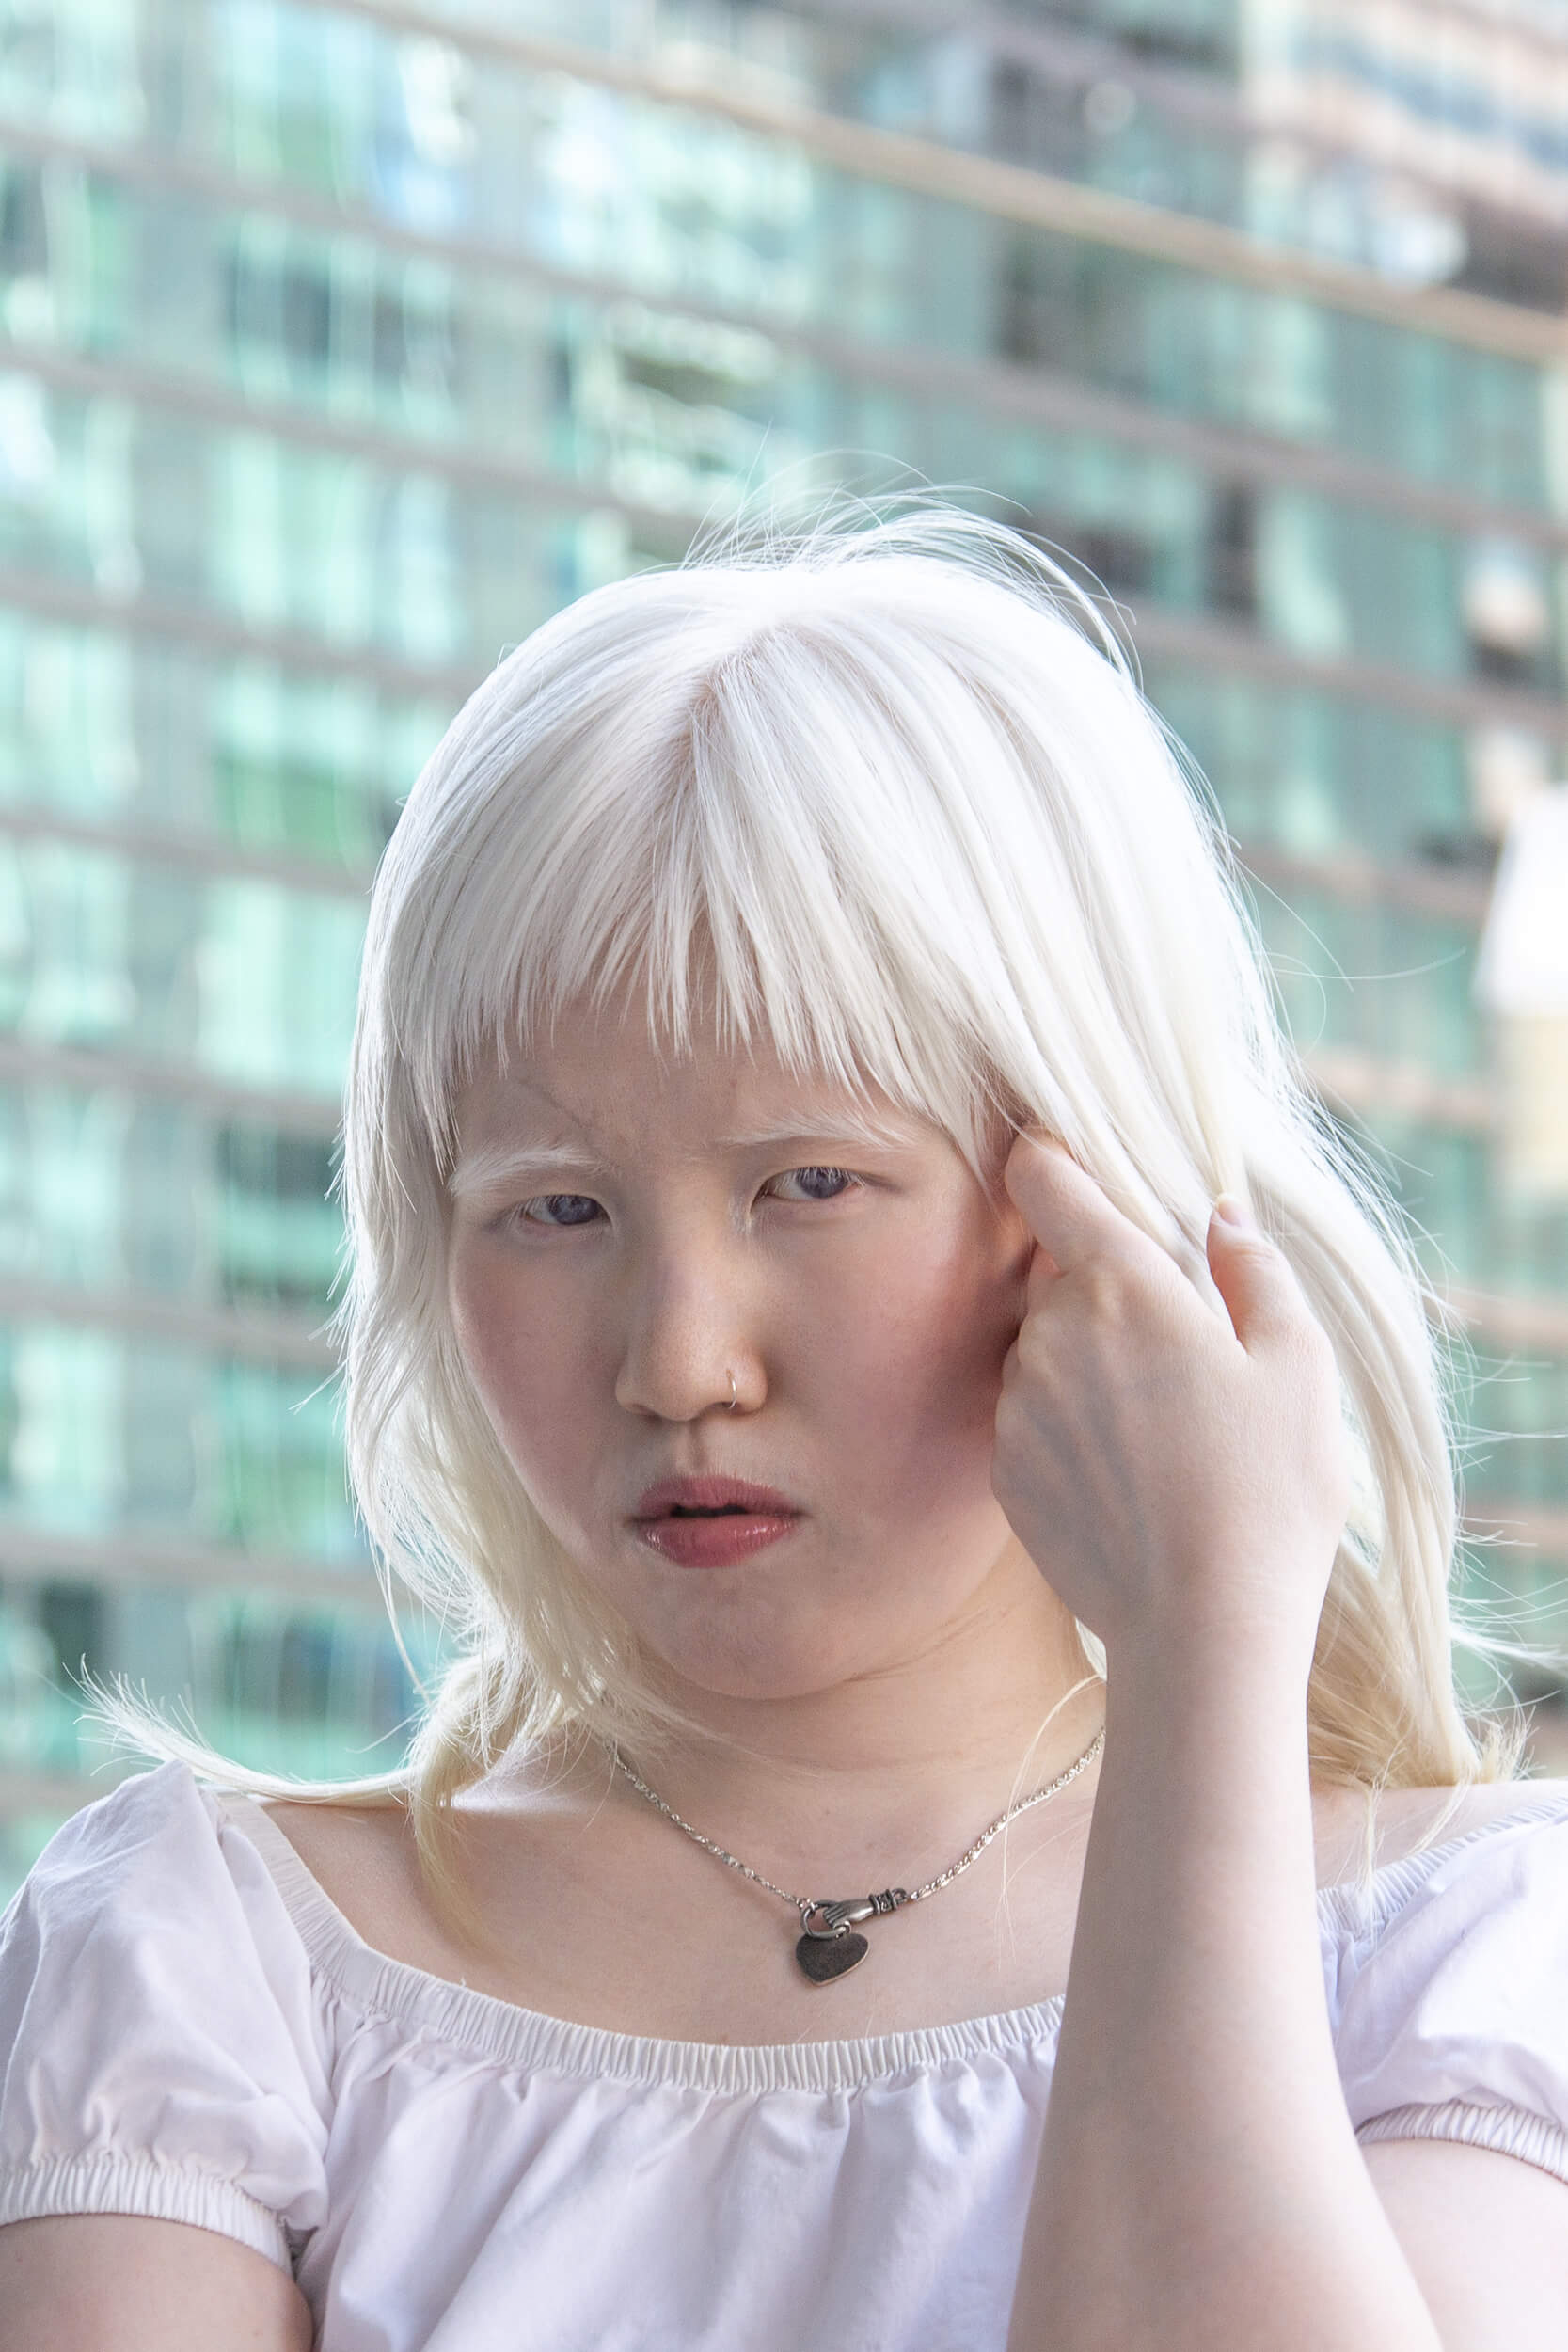 Equals in Diversity Beauty Albinism